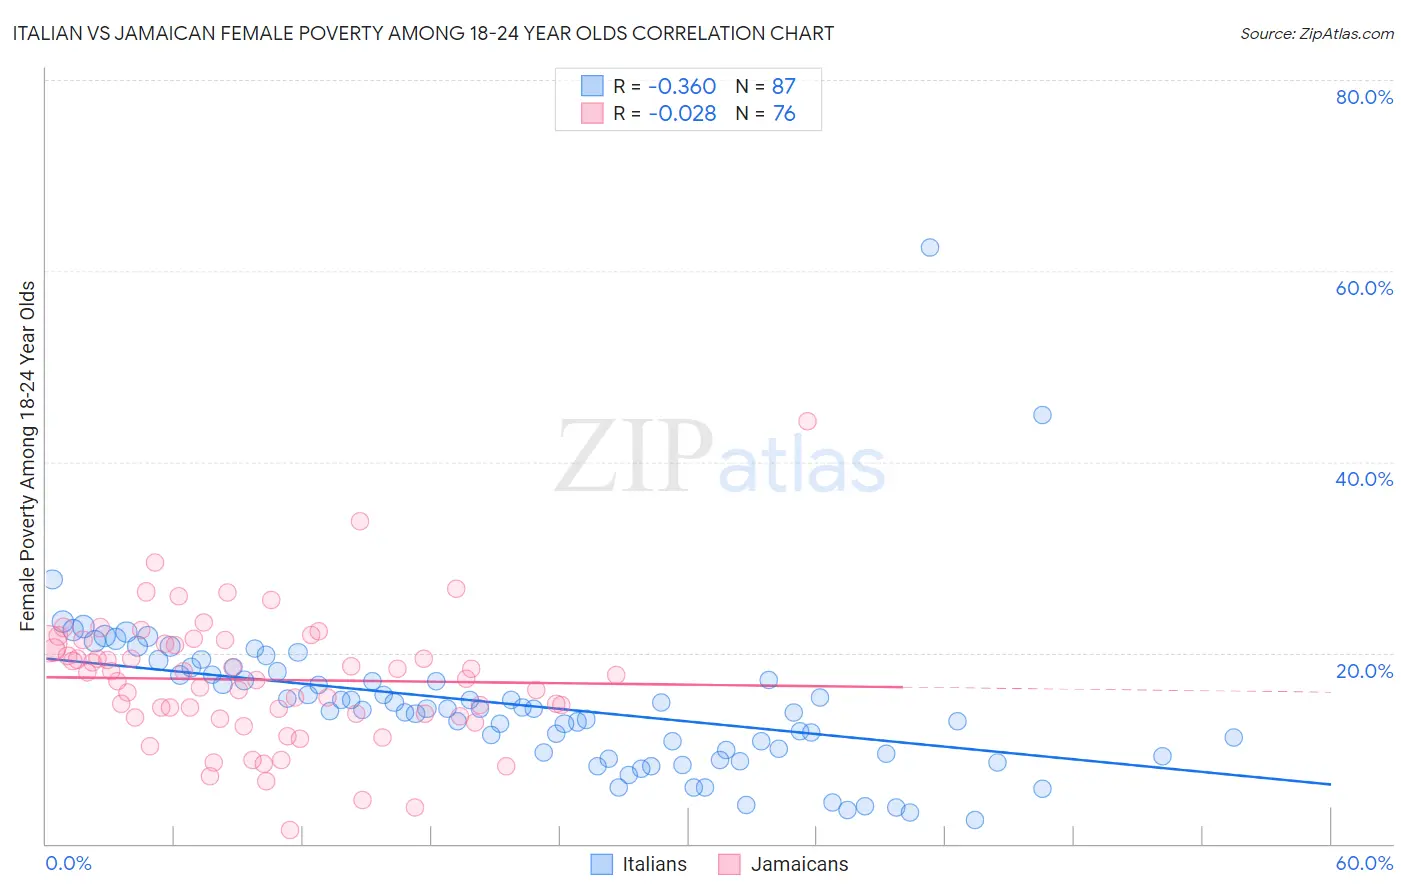 Italian vs Jamaican Female Poverty Among 18-24 Year Olds